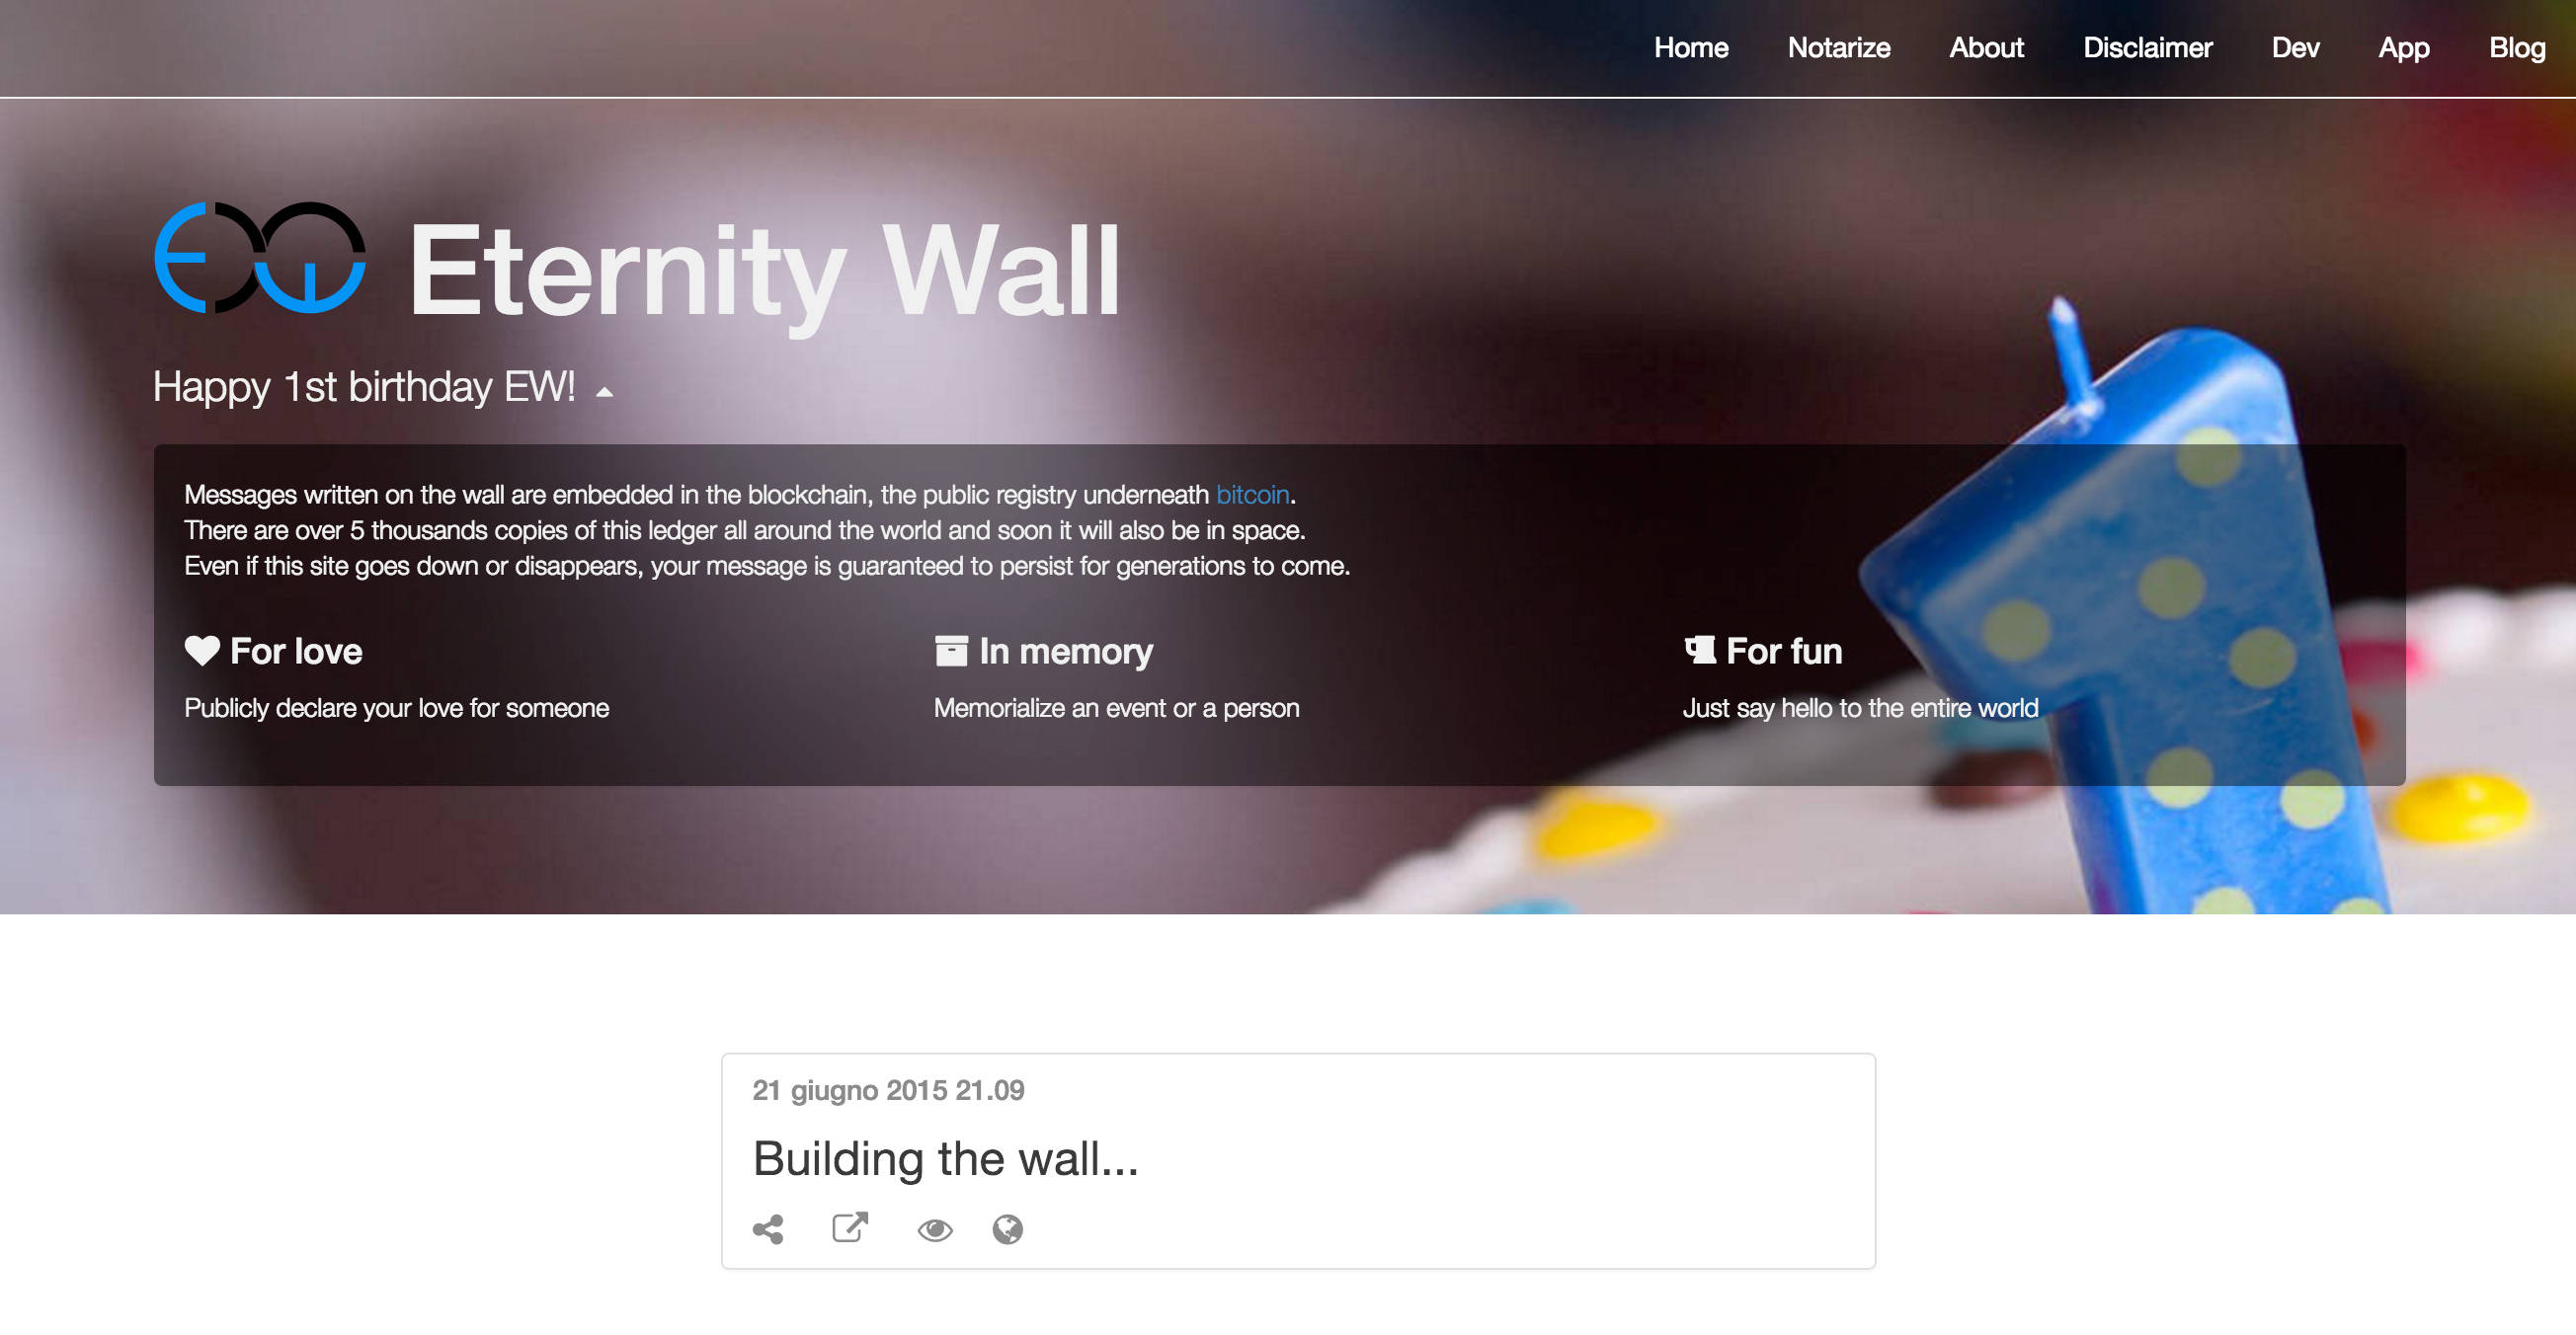 1st Eternity Wall birthday